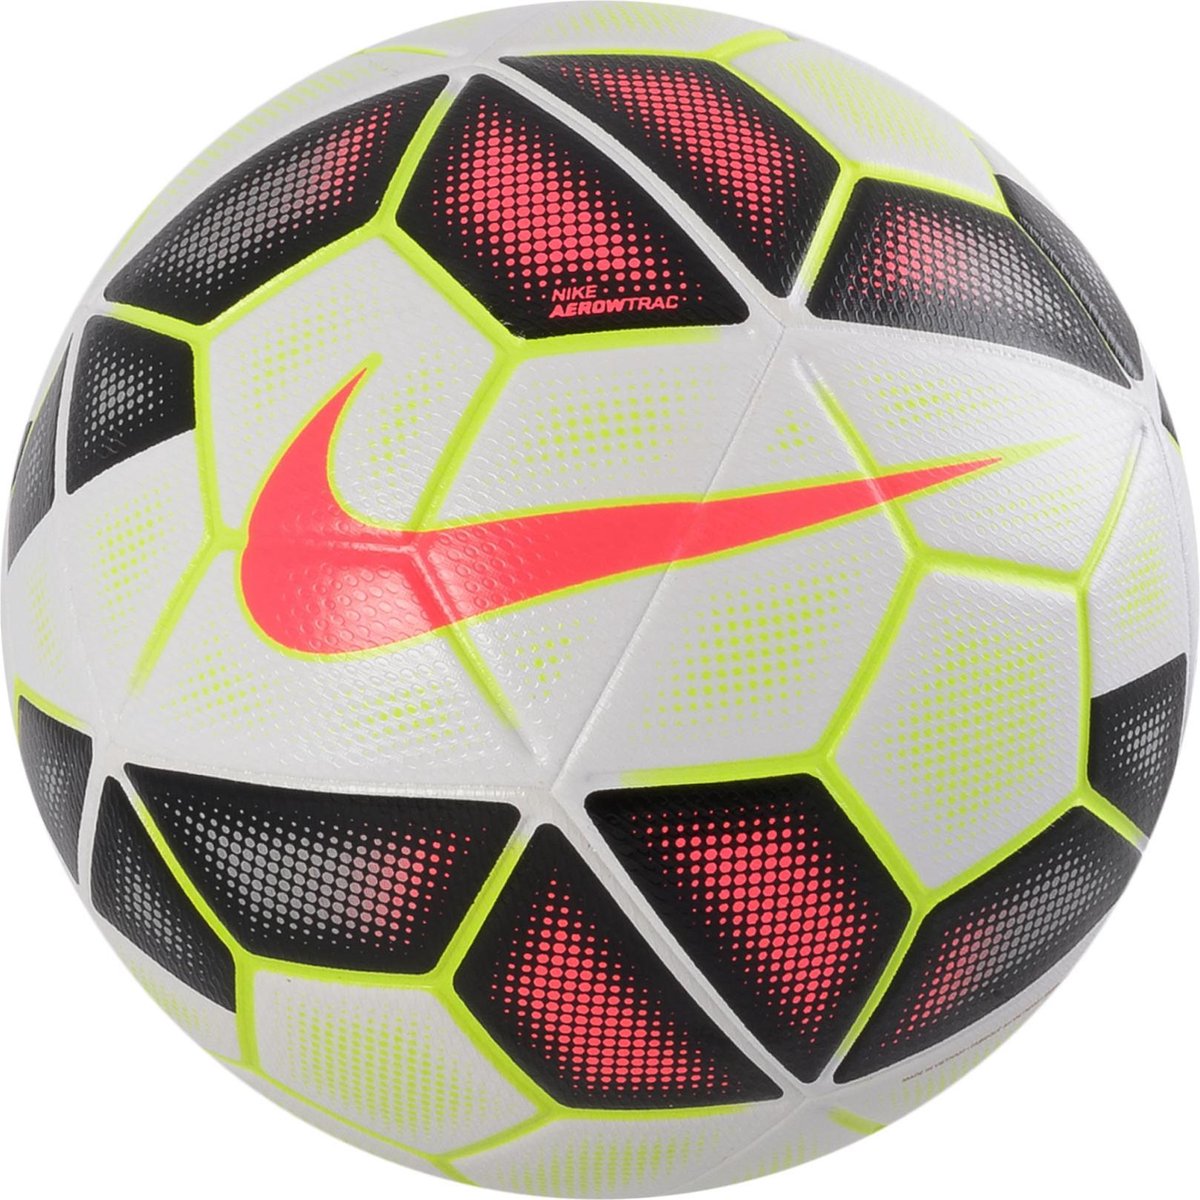 satelliet Schrikken Oraal Nike Ordem 2 Voetbal - Multi | bol.com